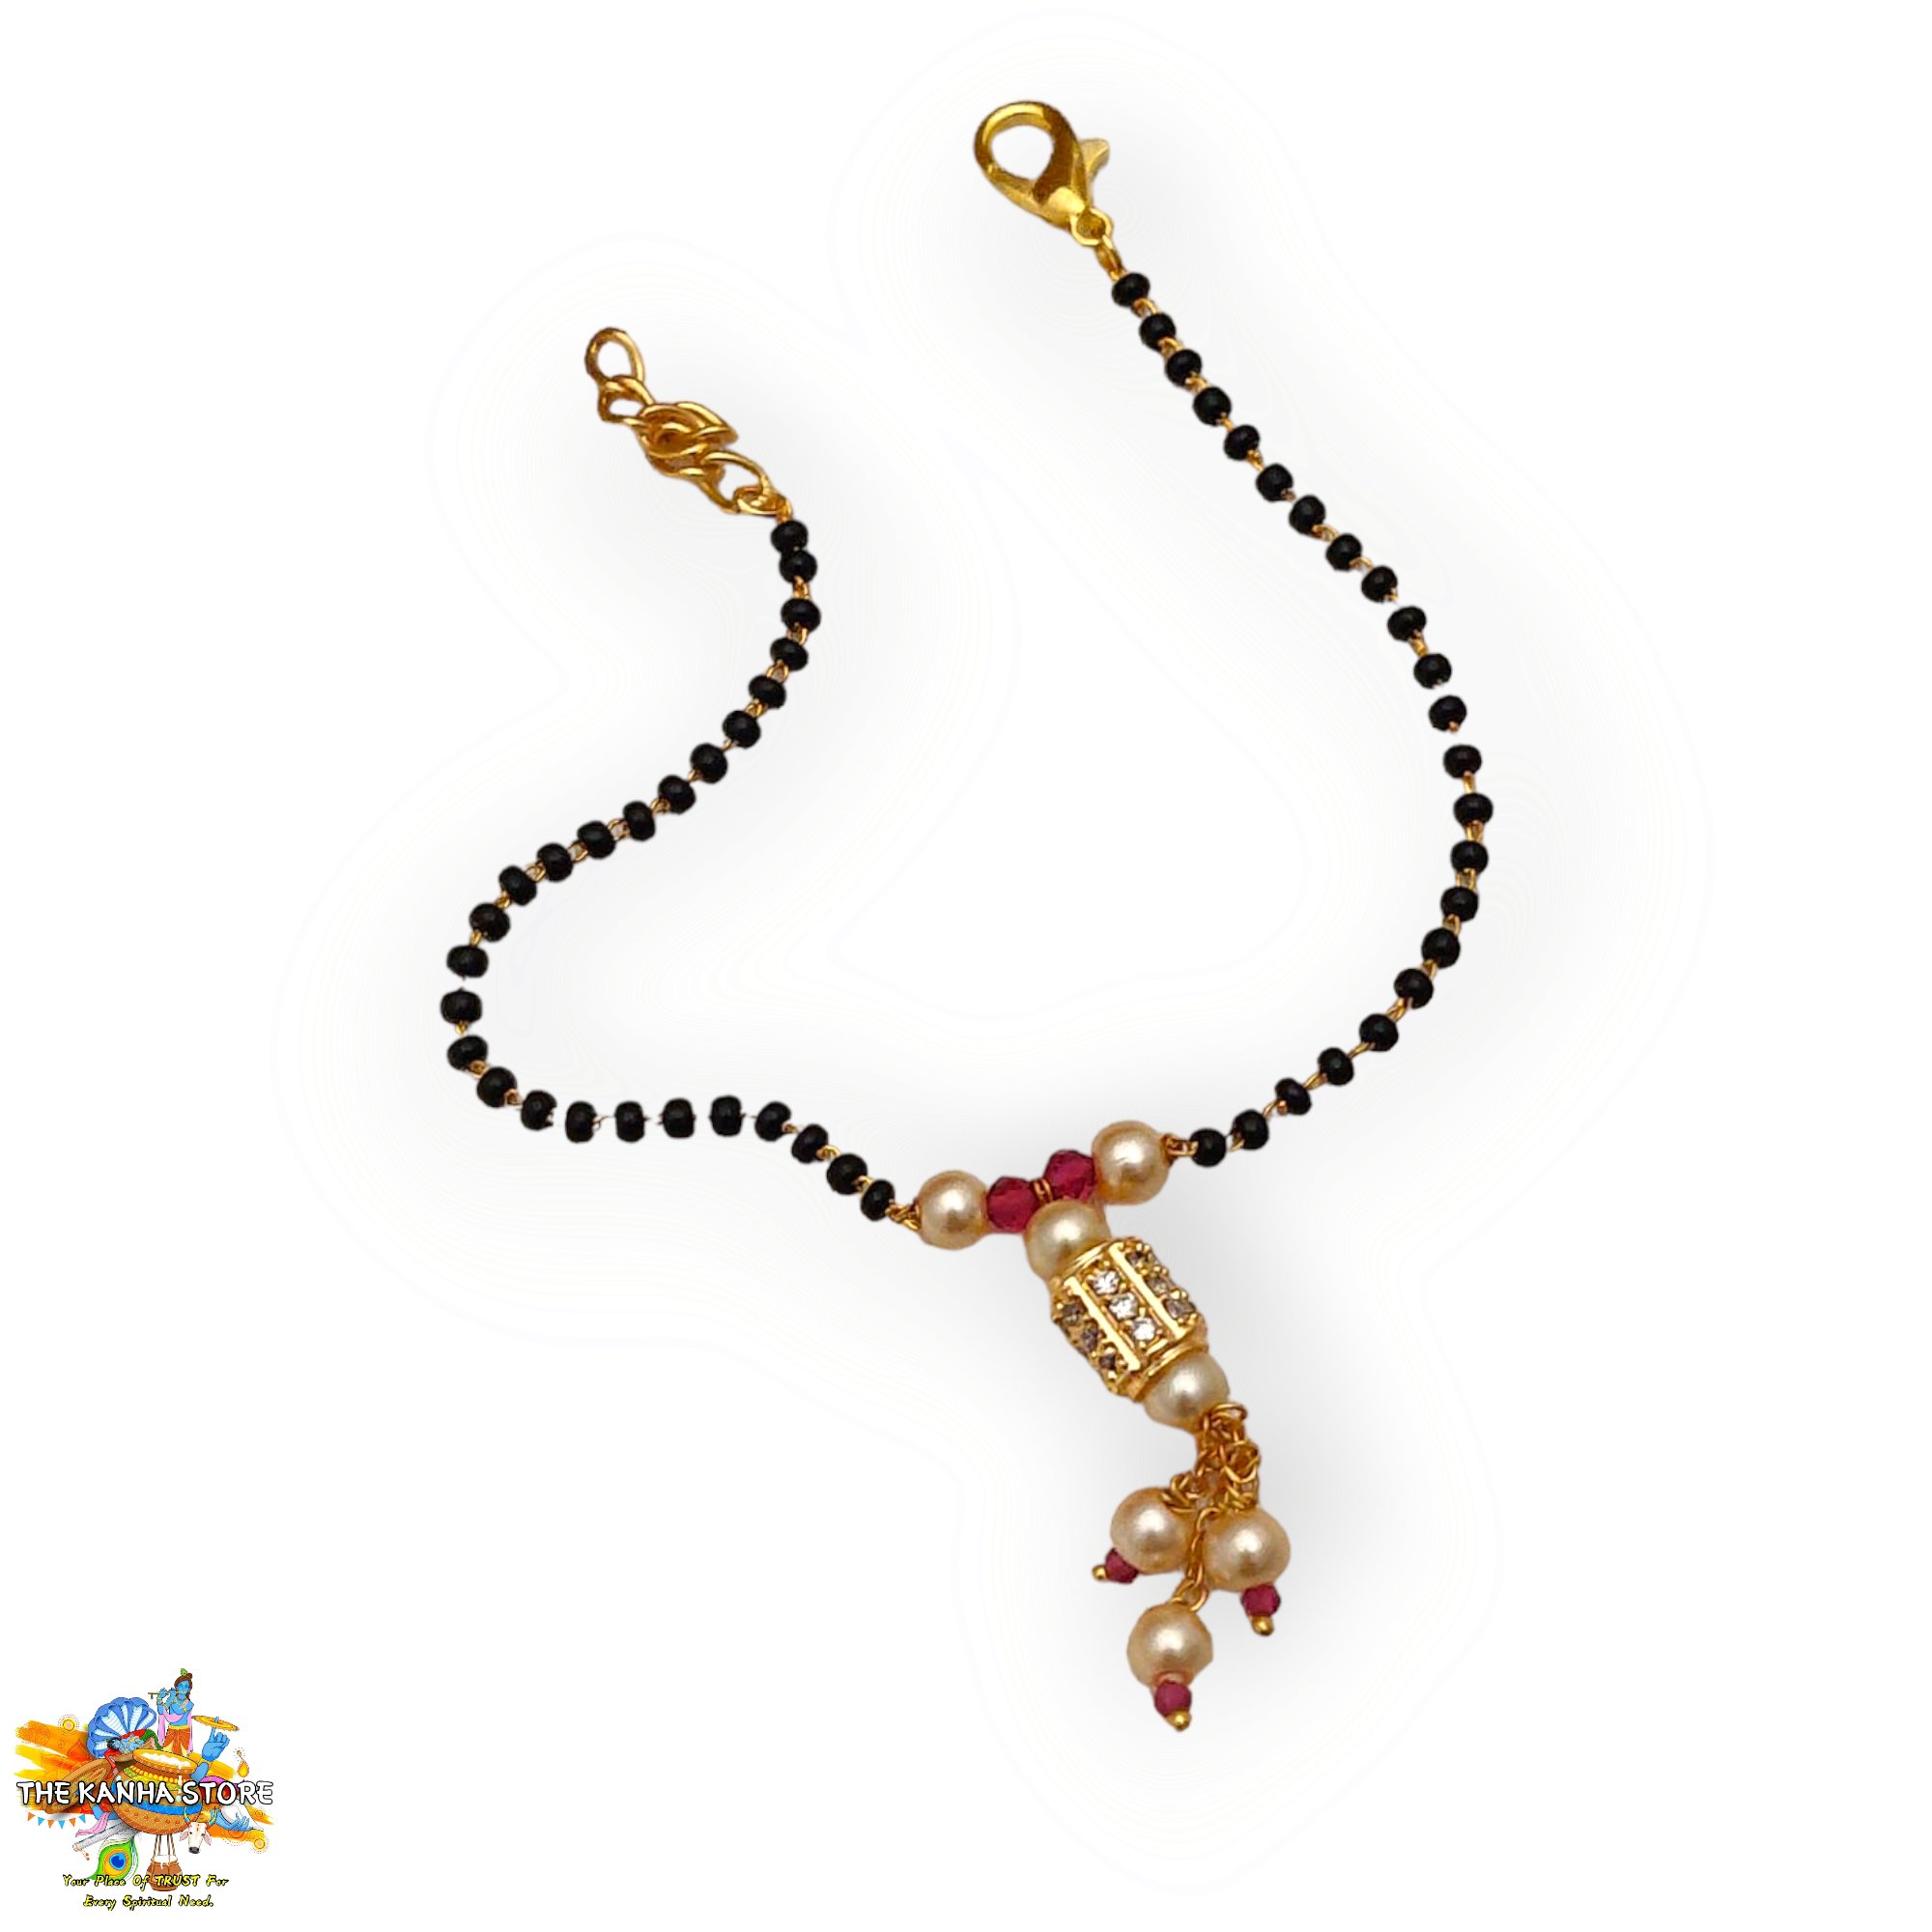 240 Black beads chain ideas  gold mangalsutra designs, black beaded  jewelry, black beads mangalsutra design